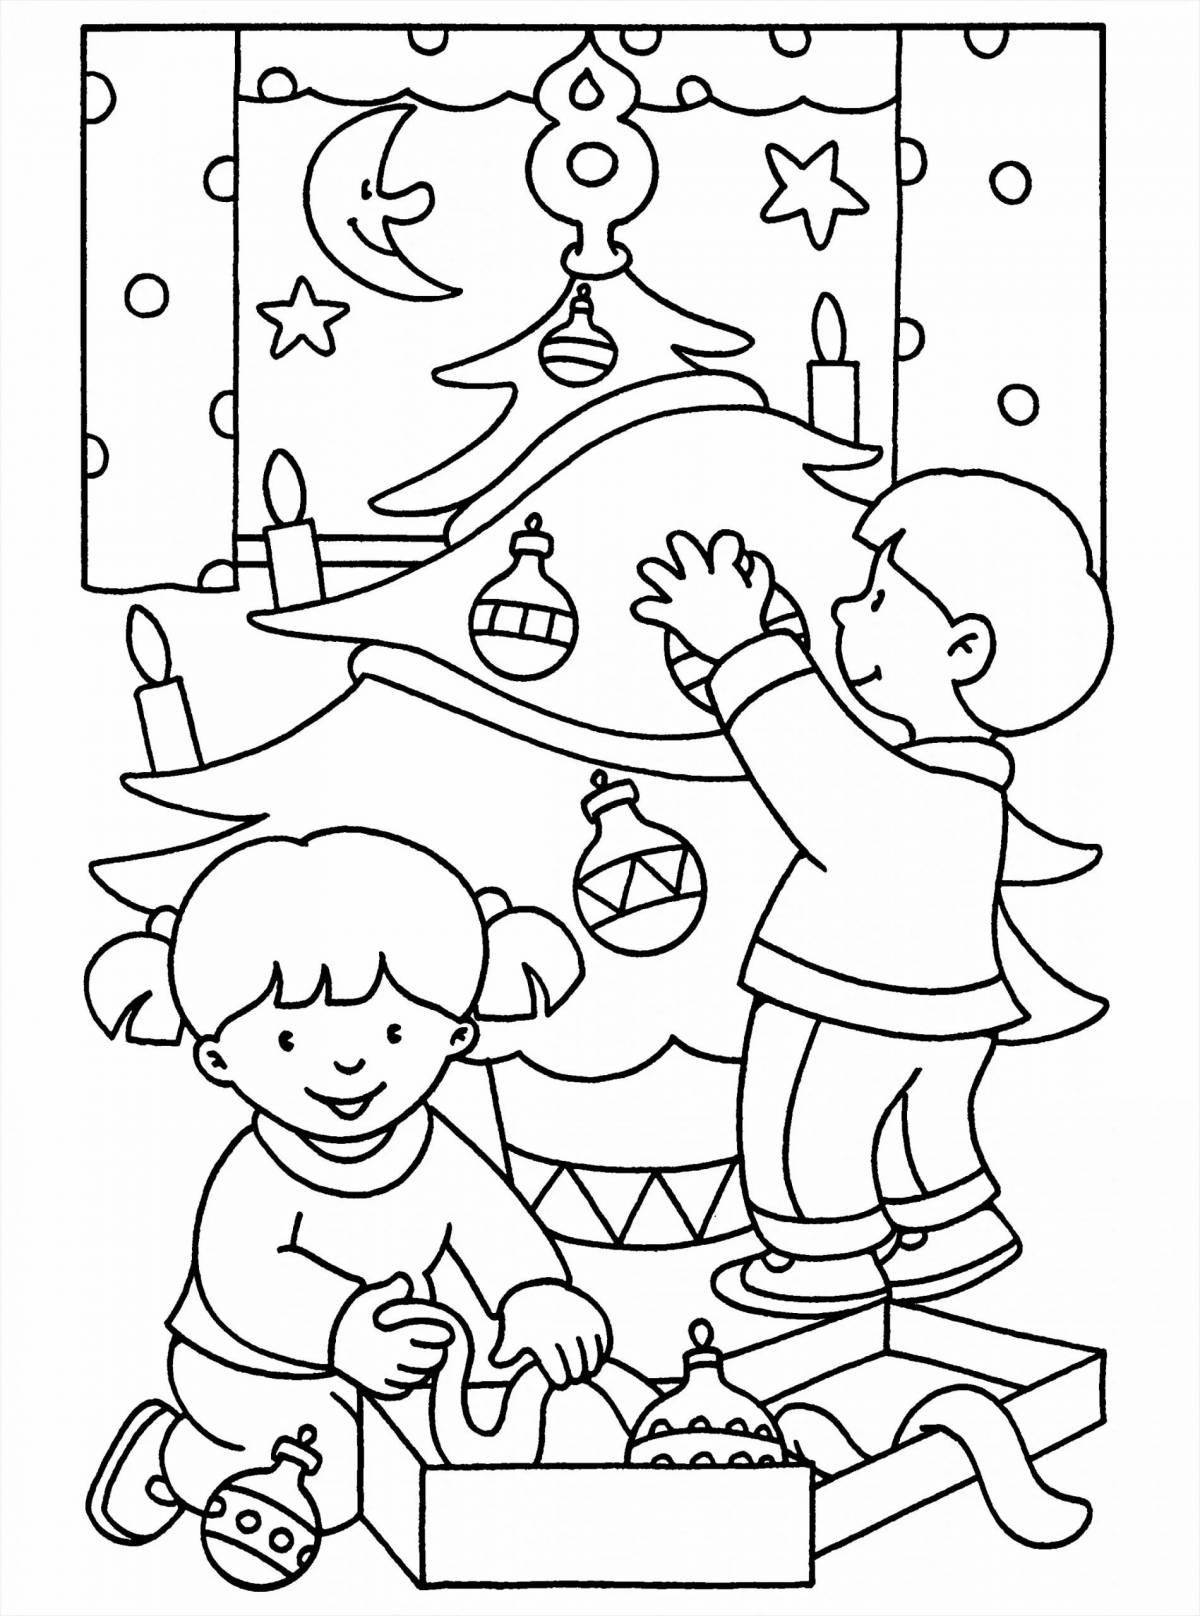 Joyful children decorate the Christmas tree